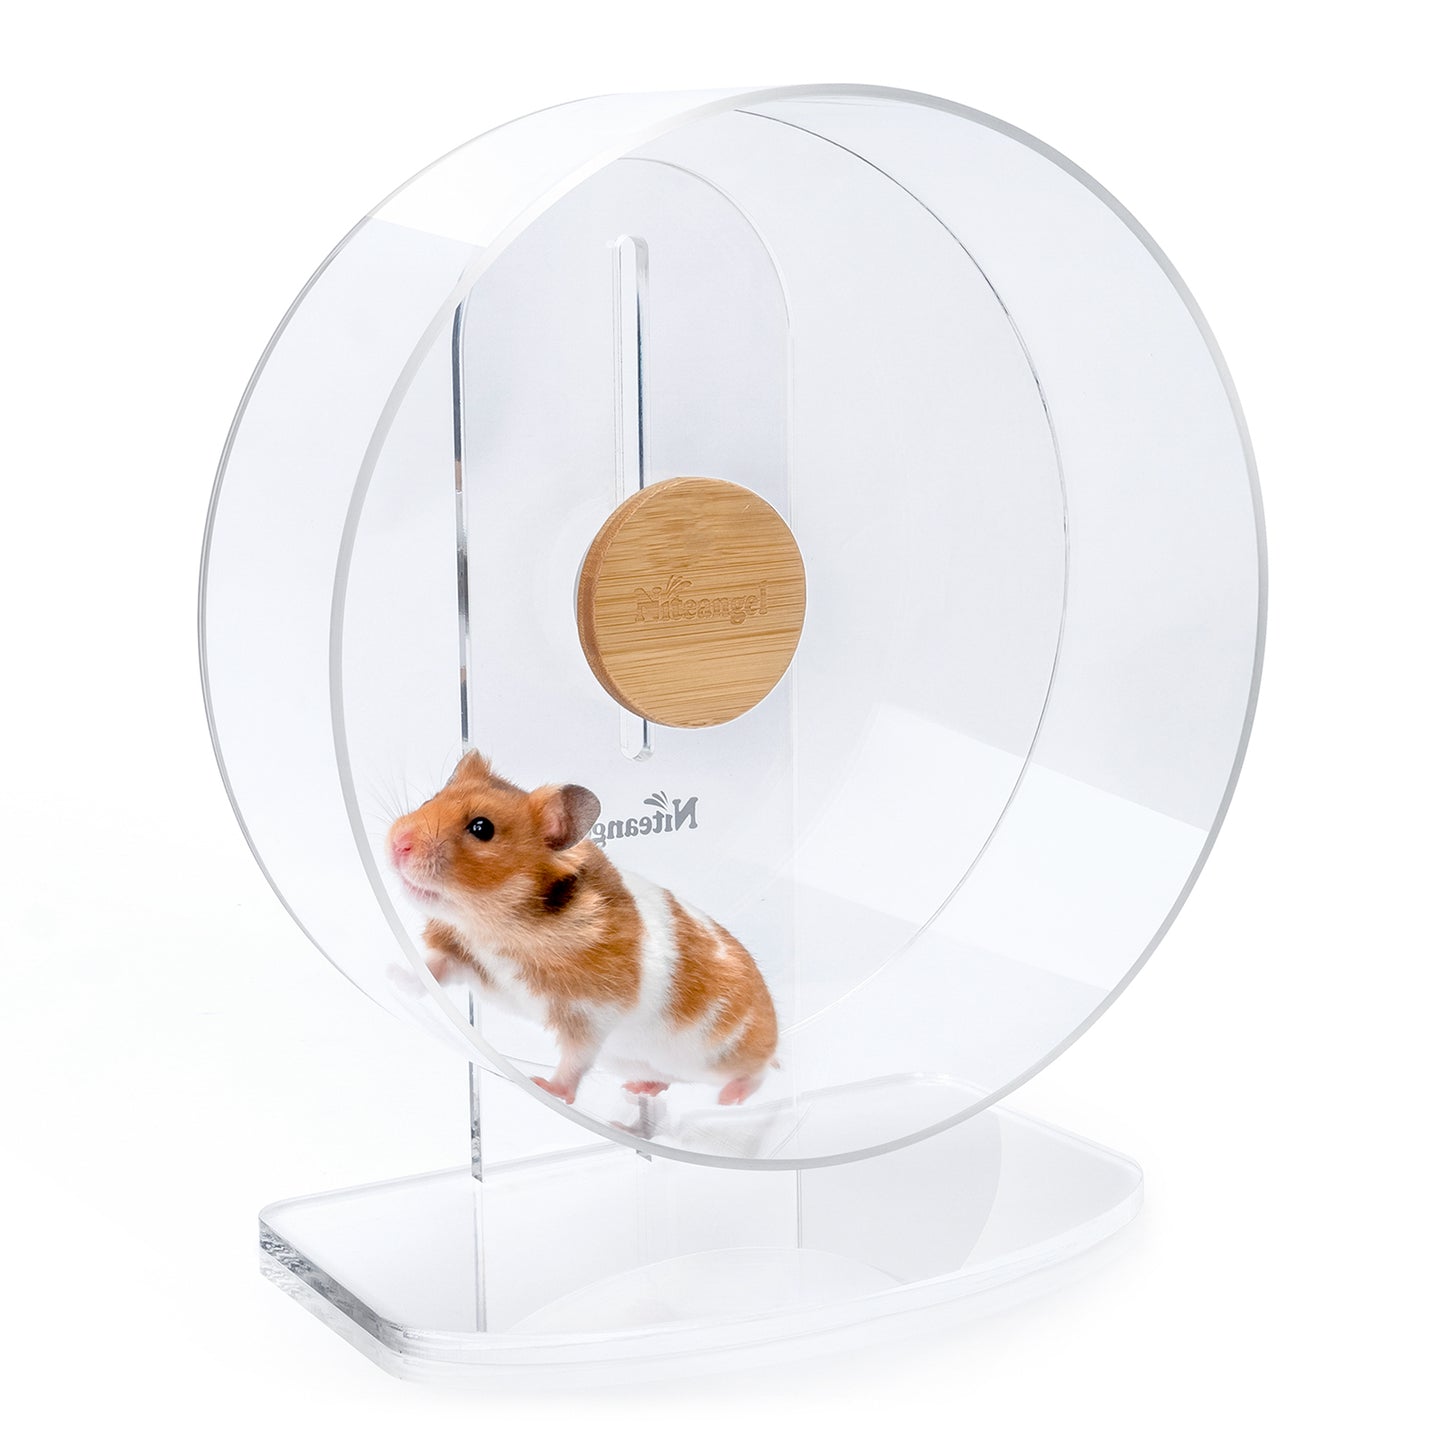 Niteangel Silent Hamster Exercise Wheel - Dual-Bearing Quiet Spinning Acrylic Hamster Running Wheel for Hamster